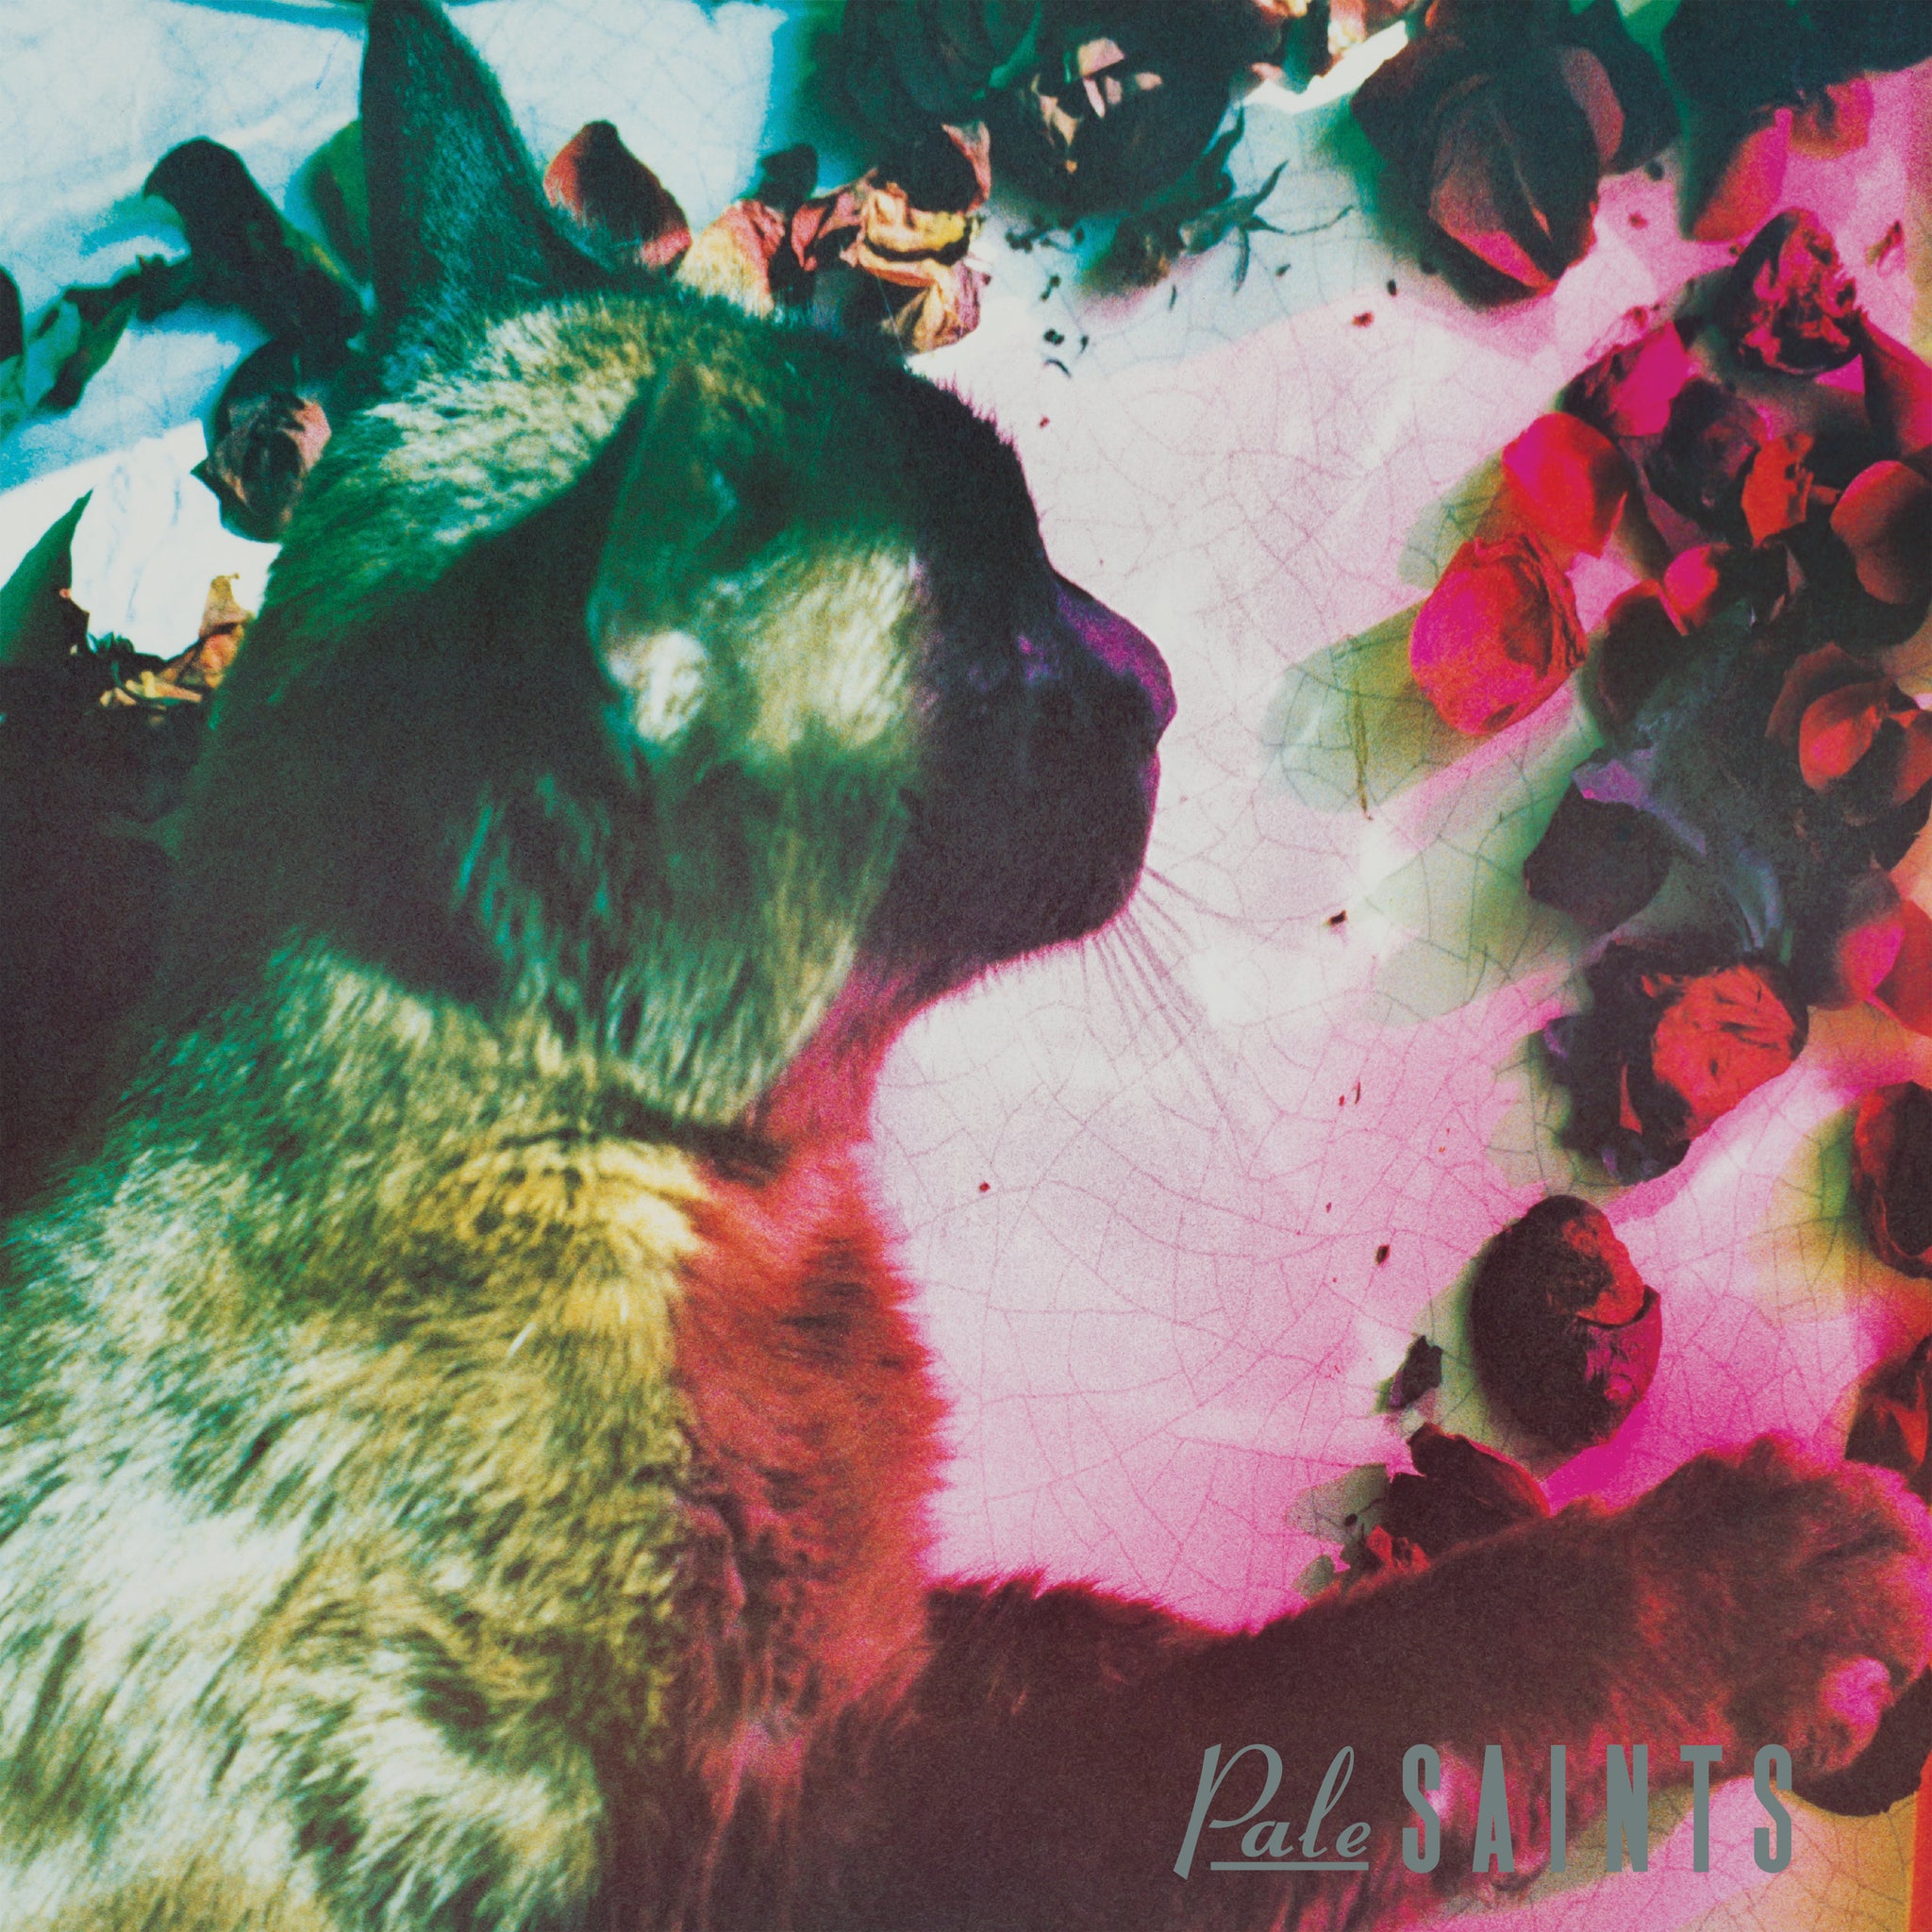 PALE SAINTS - THE COMFORTS OF MADNESS Vinyl LP